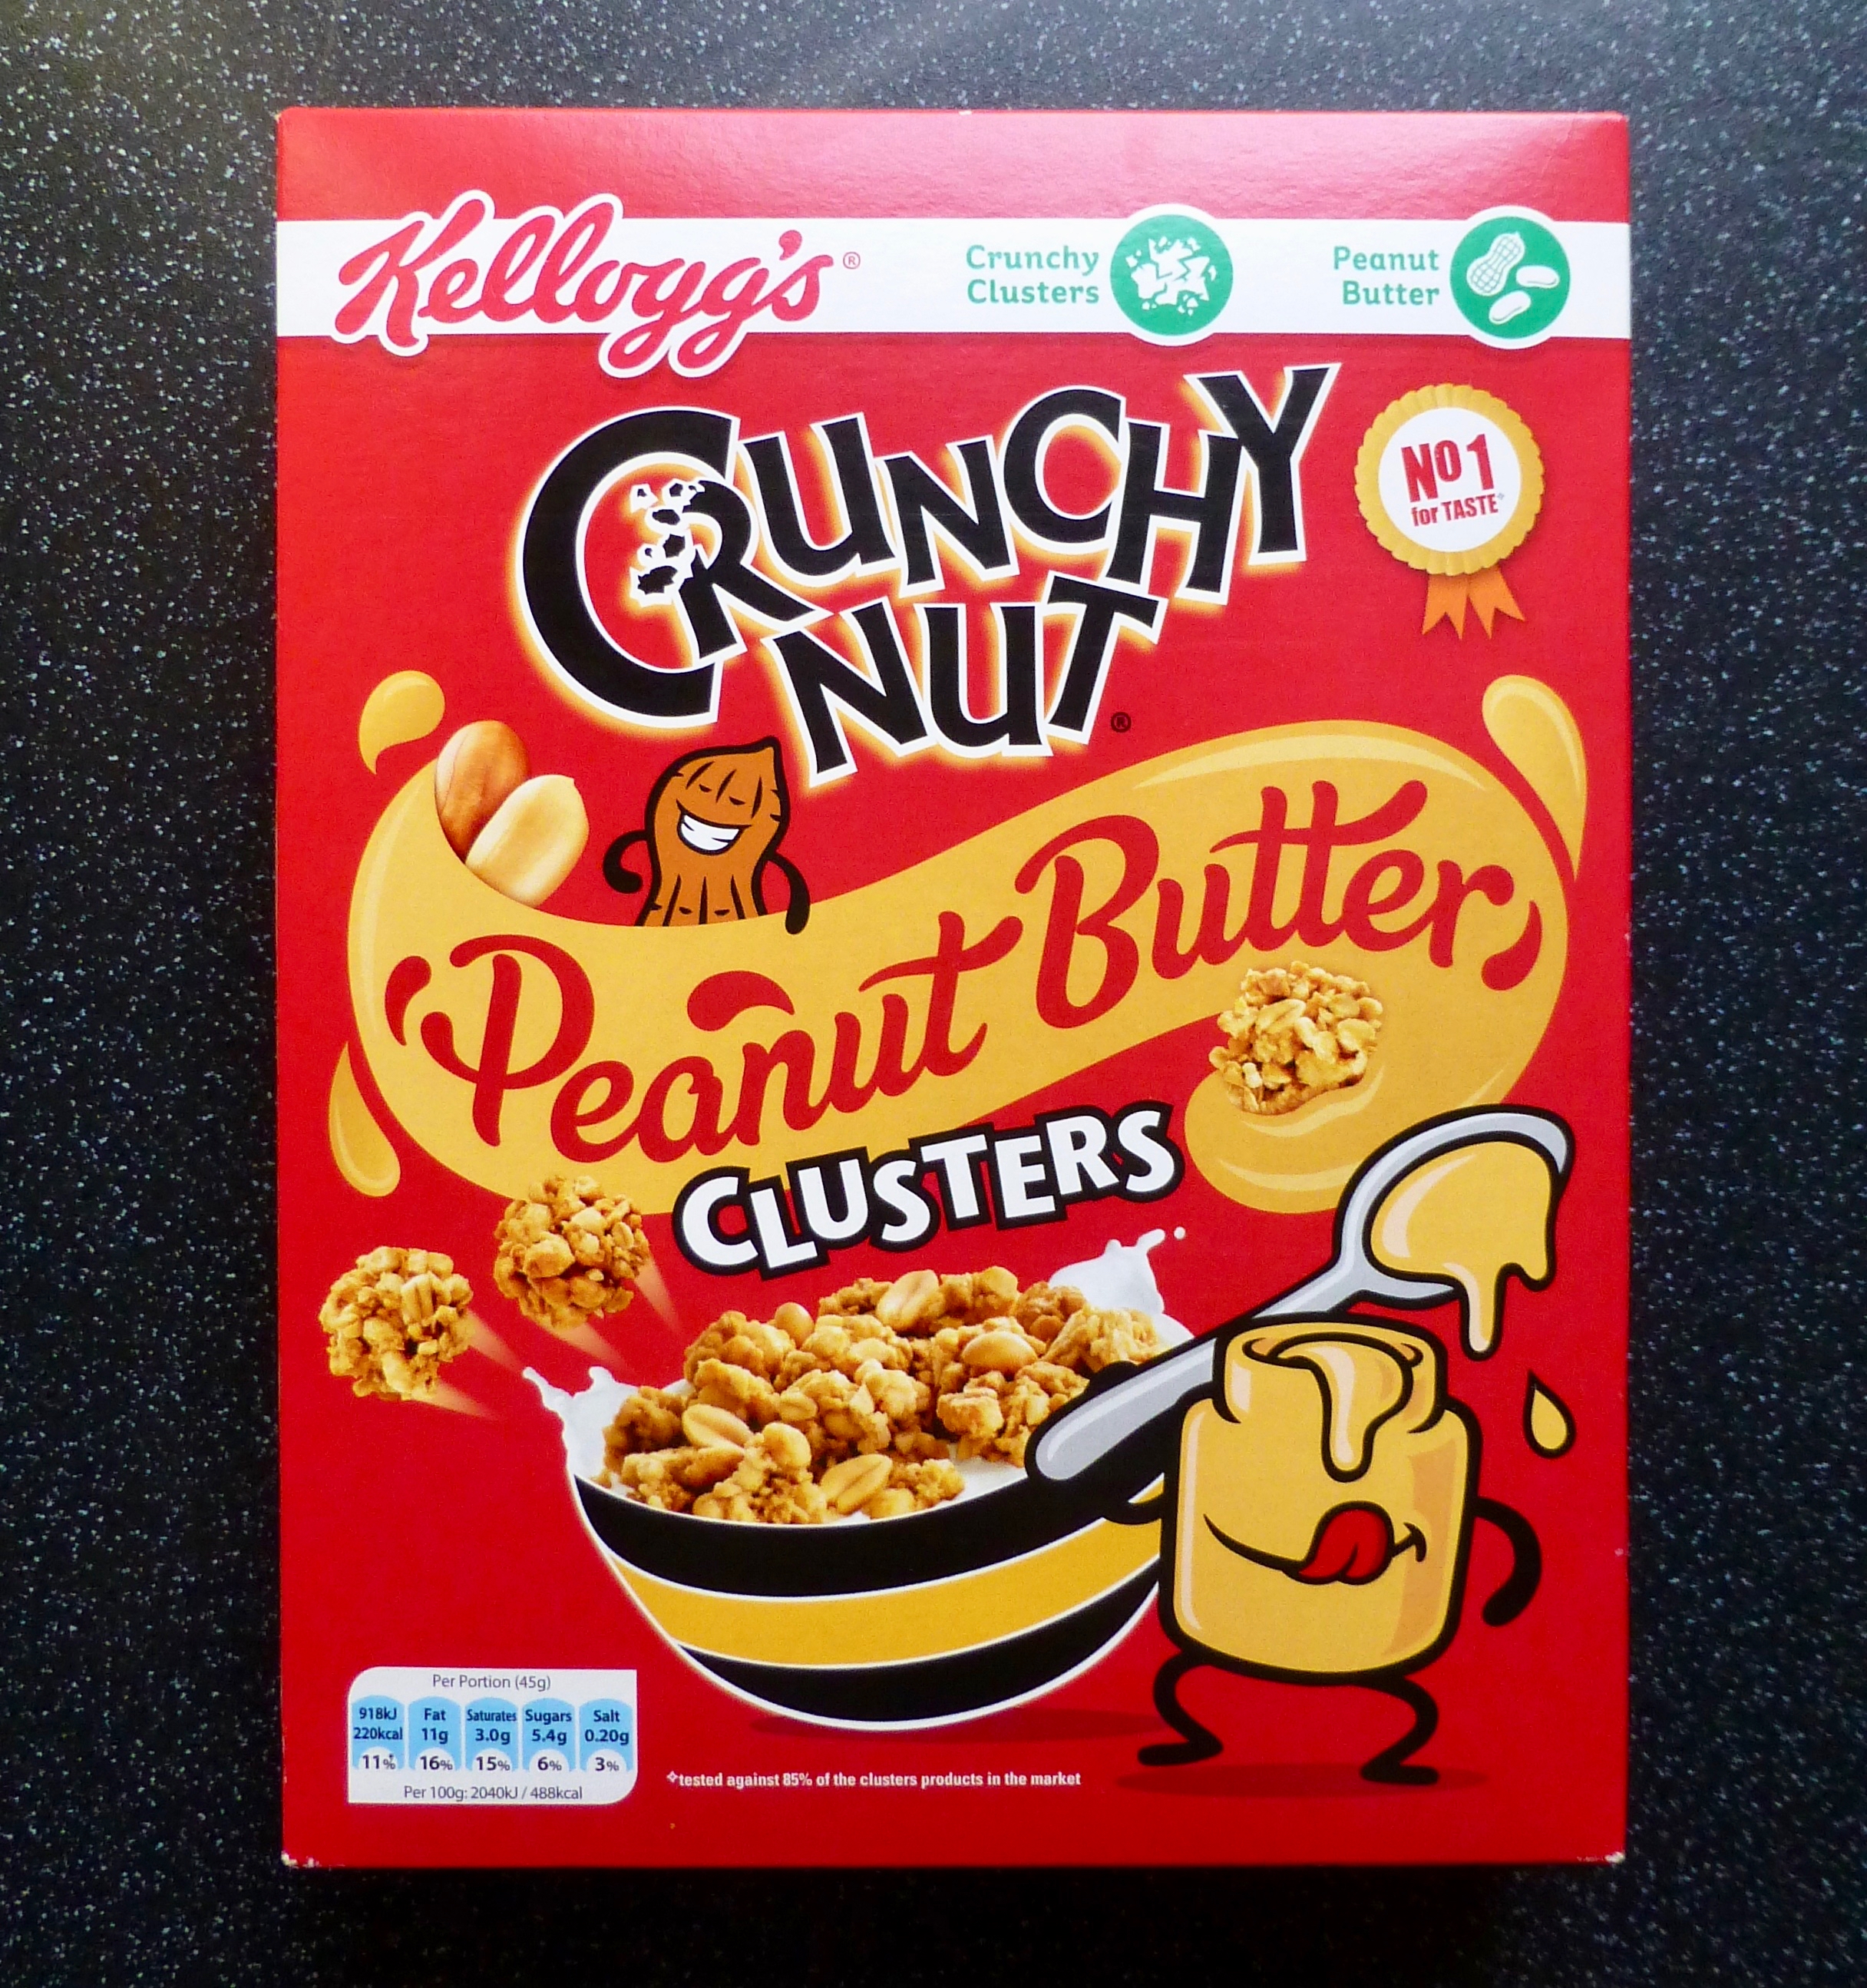 Kellogg's Crunchy Nut Peanut Butter Clusters